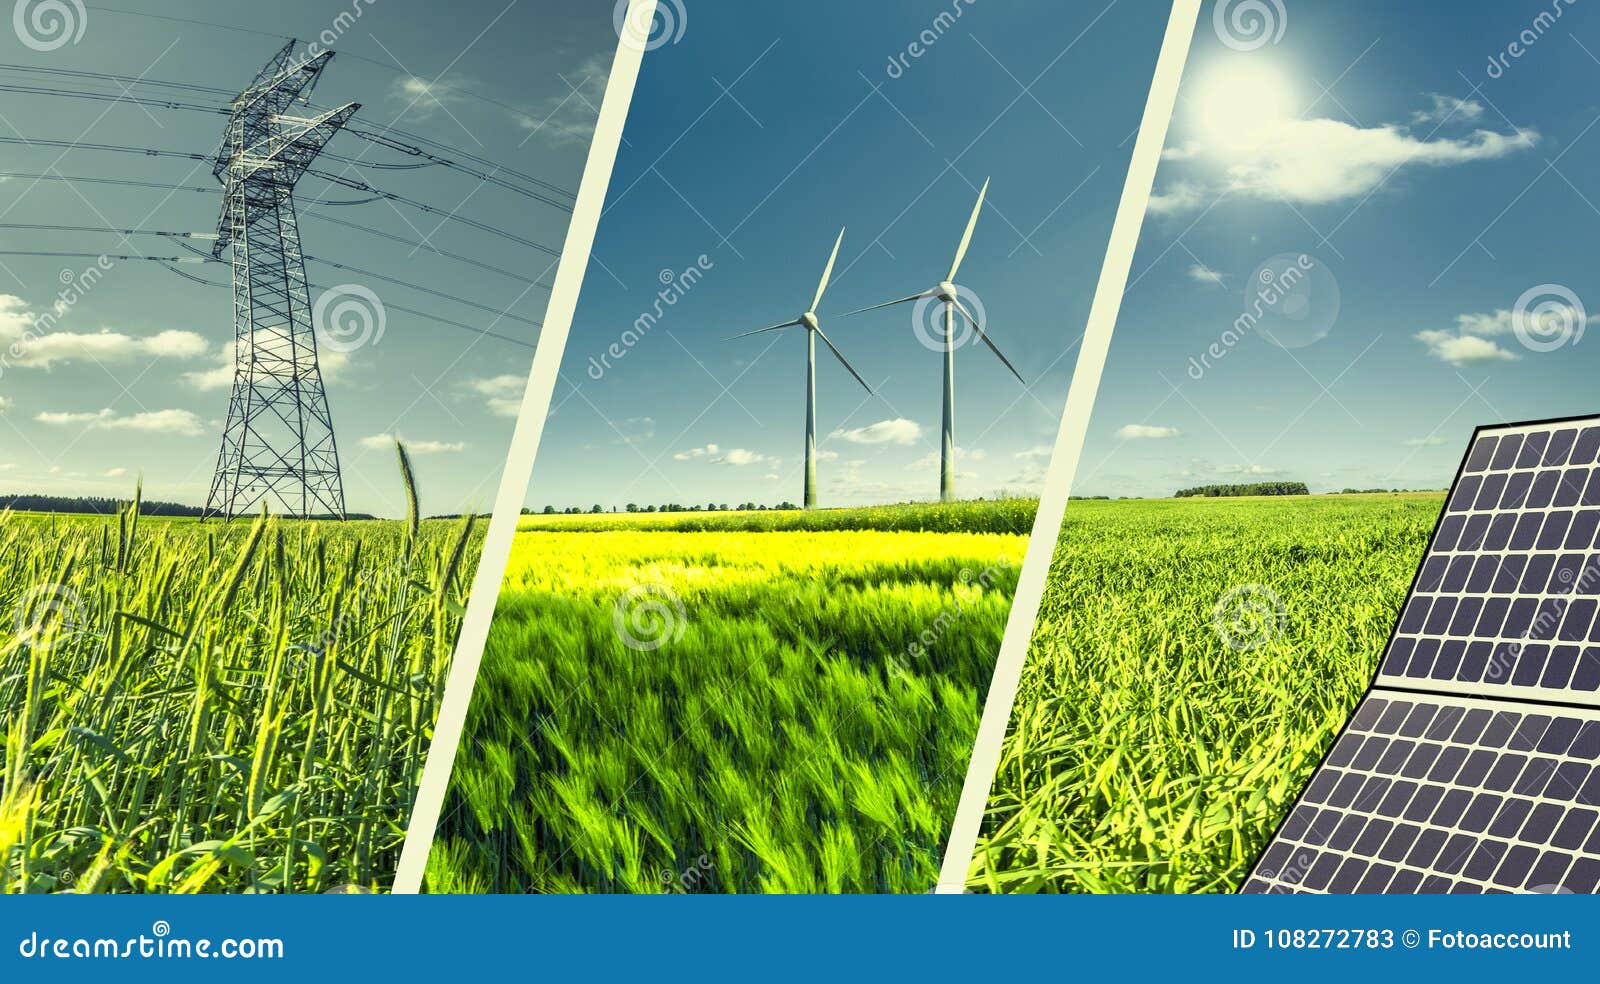 renewable energies concept collage